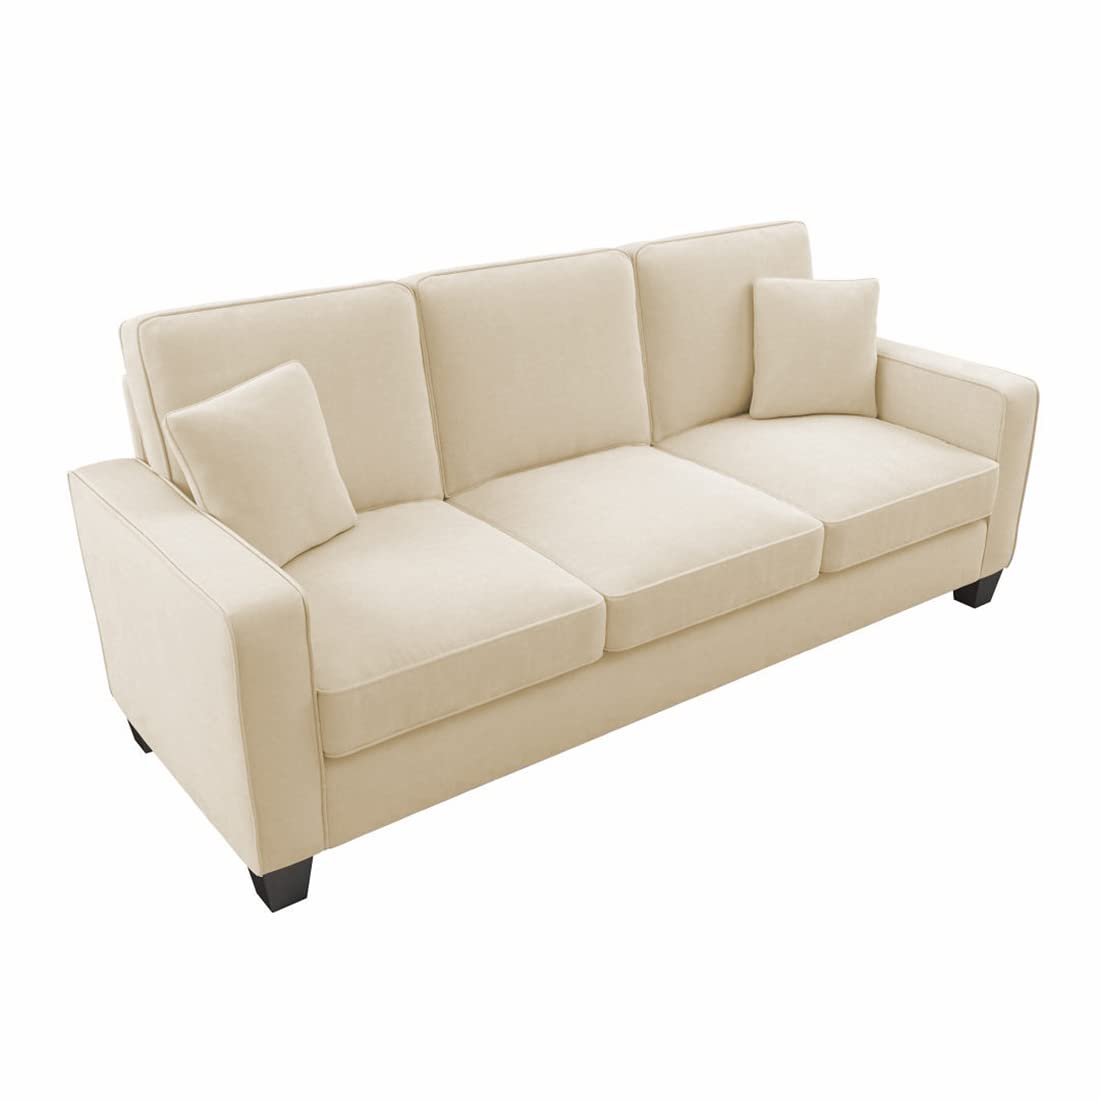 Torque India Moscow 3 Seater Fabric Sofa For Living Room - Torque India